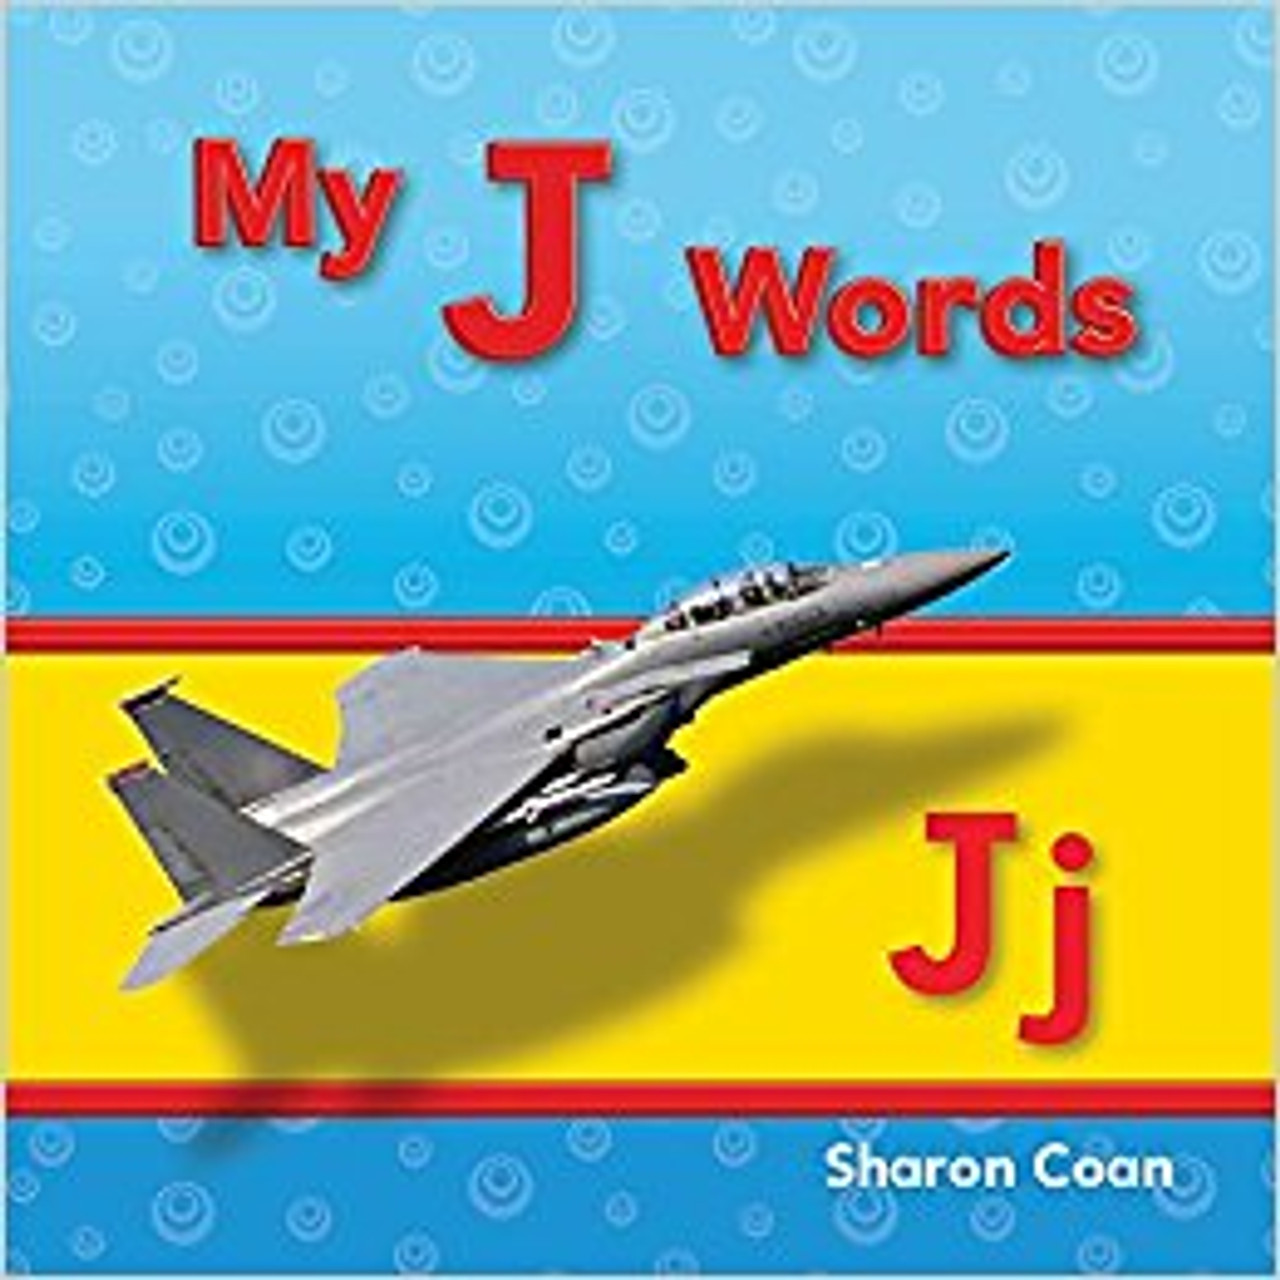 My J Words by Sharon Coan